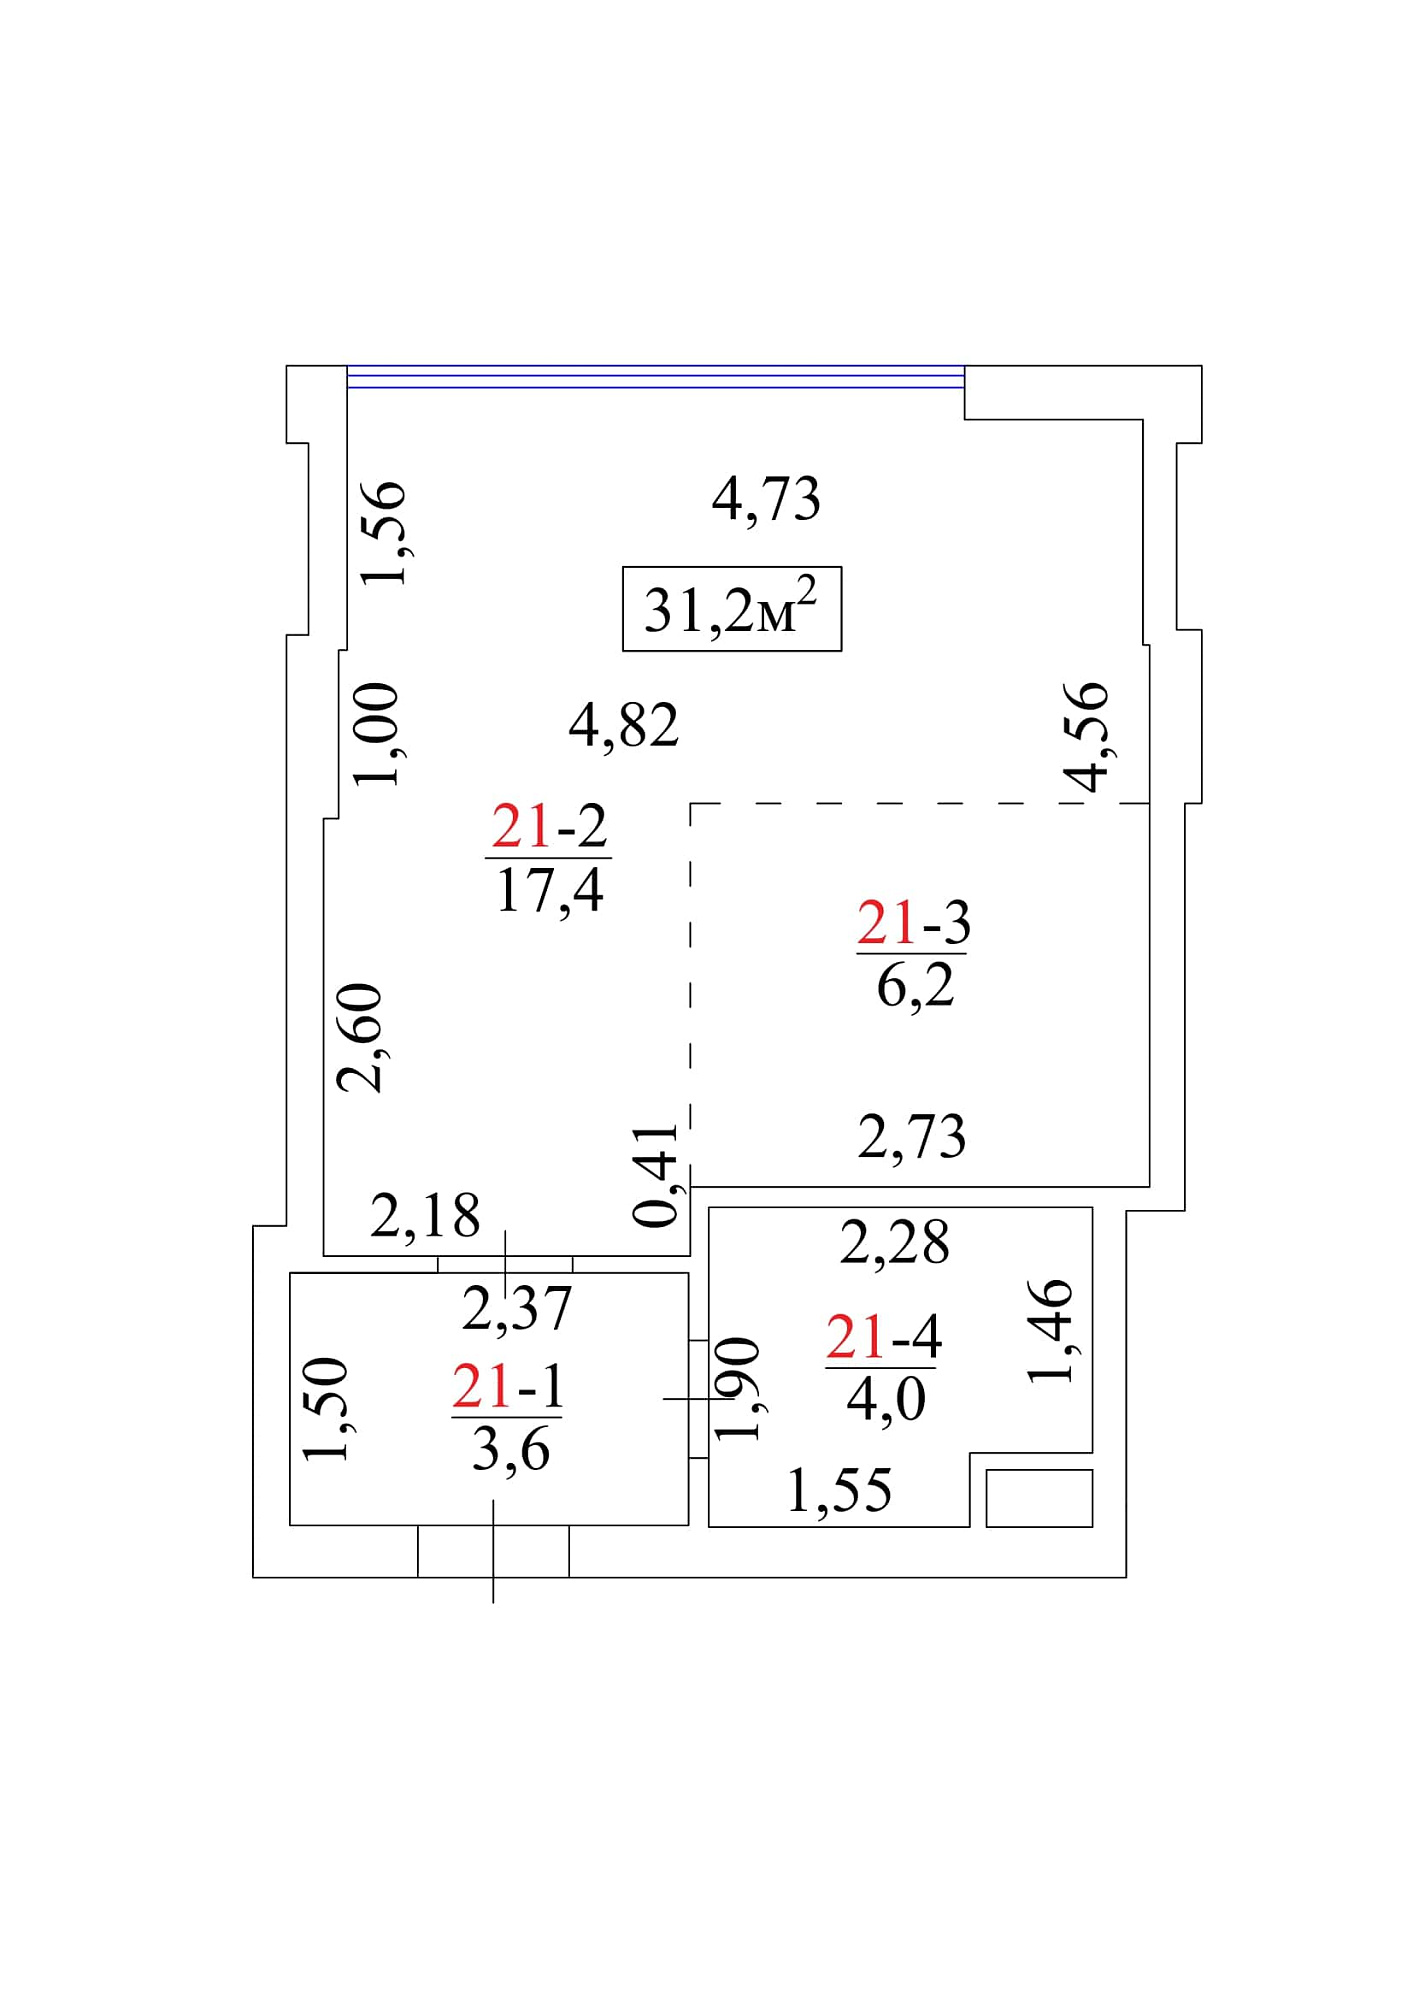 Planning Smart flats area 31.2m2, AB-01-03/00022.